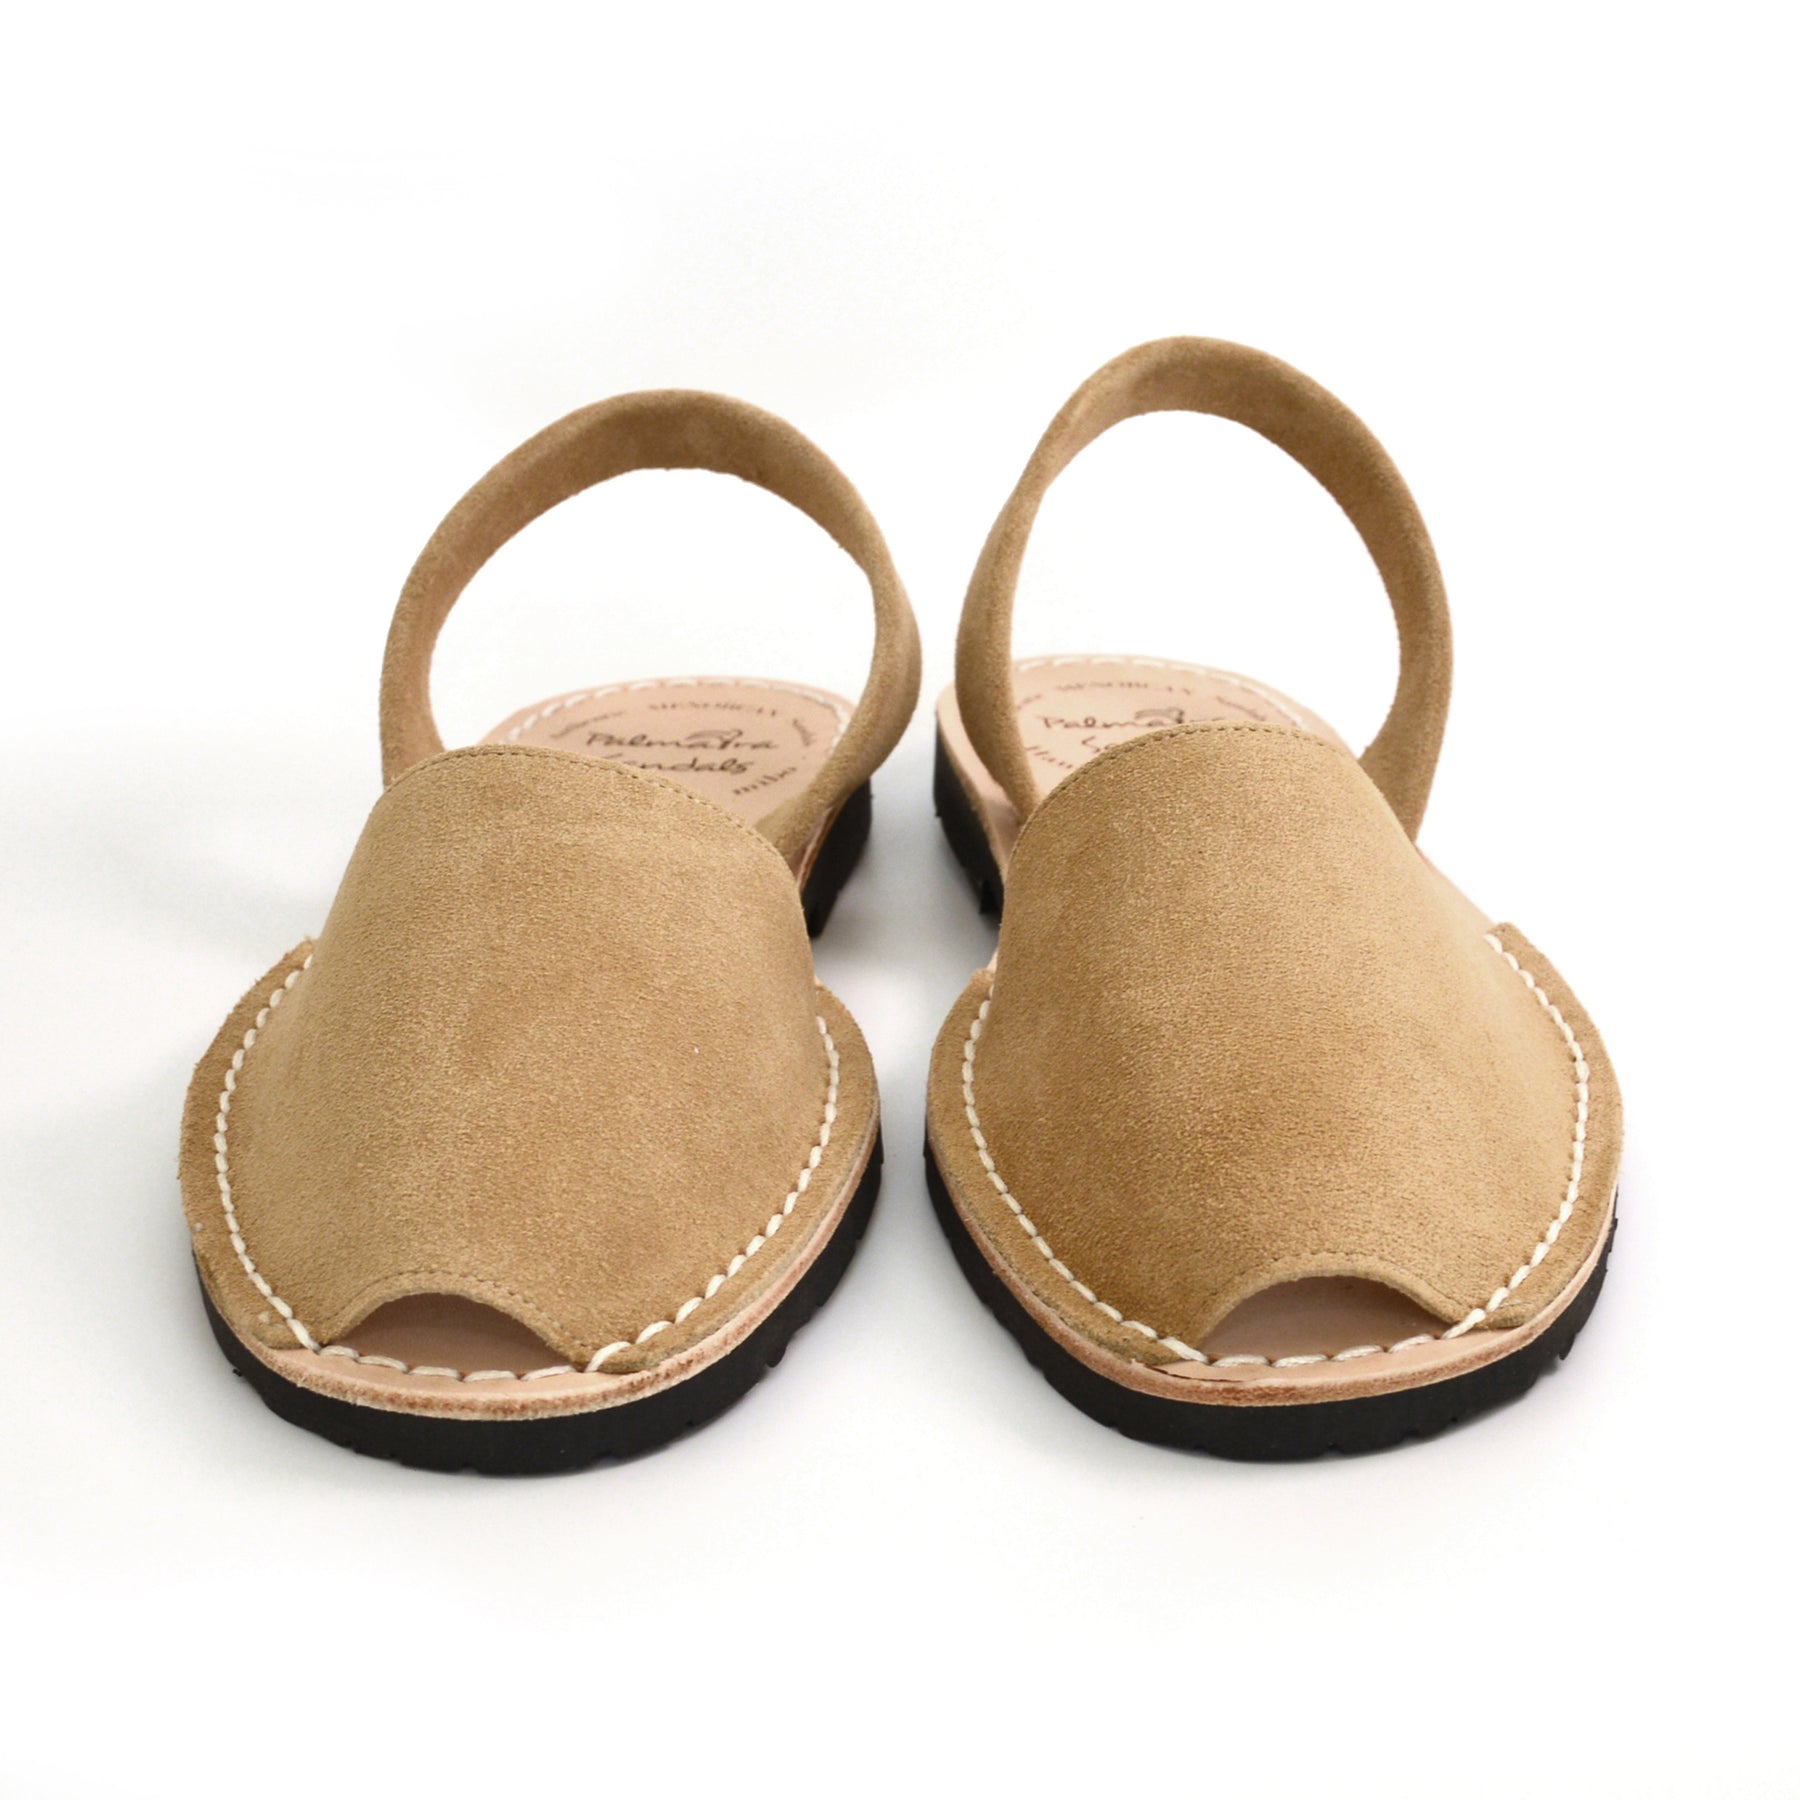 neutral suede spanish menorcan avarcas sandals